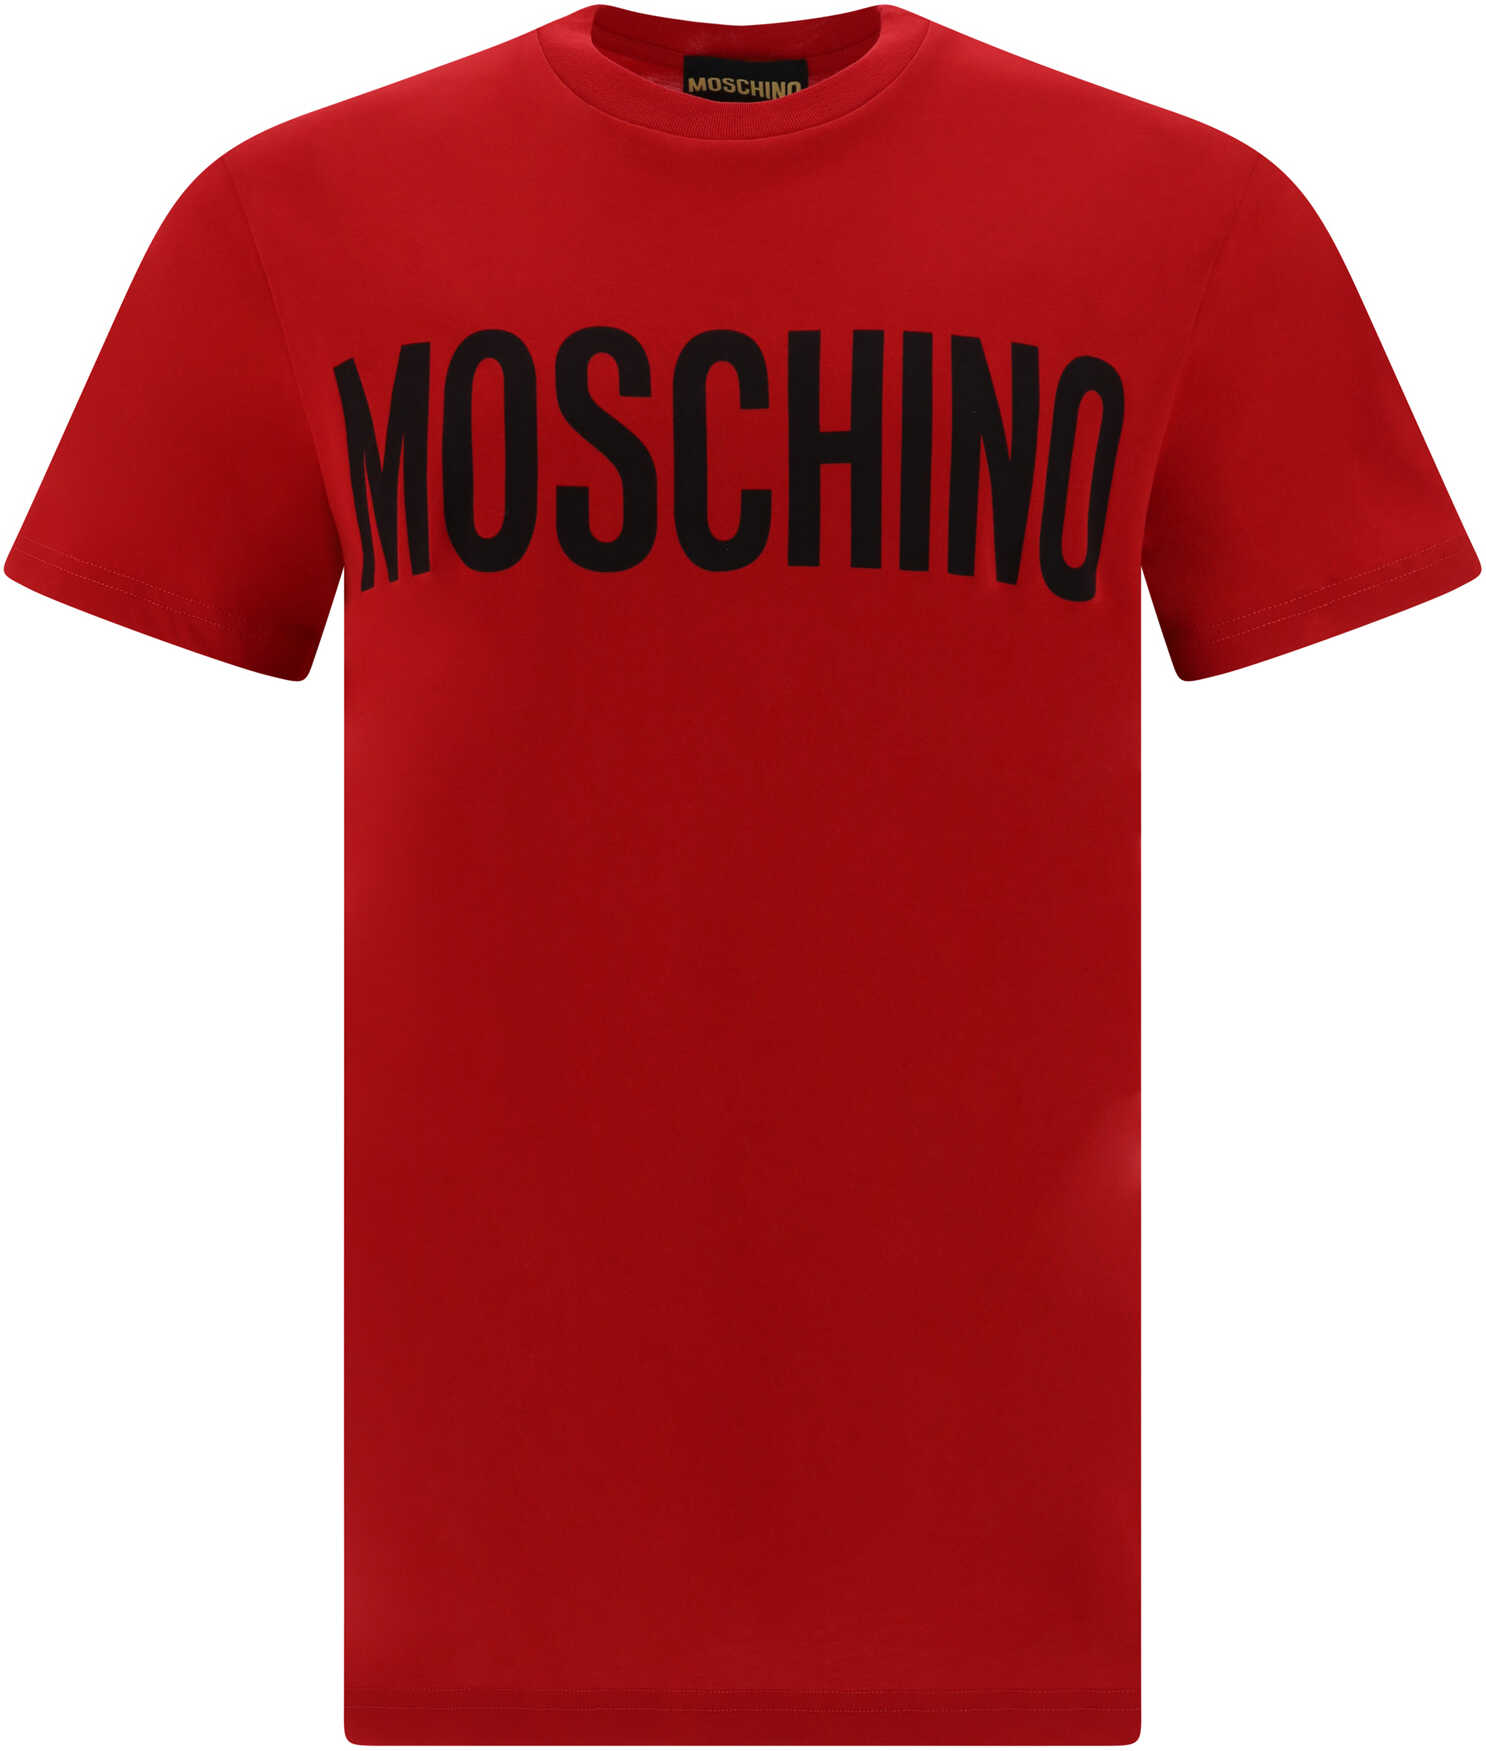 Moschino T-Shirt A1116